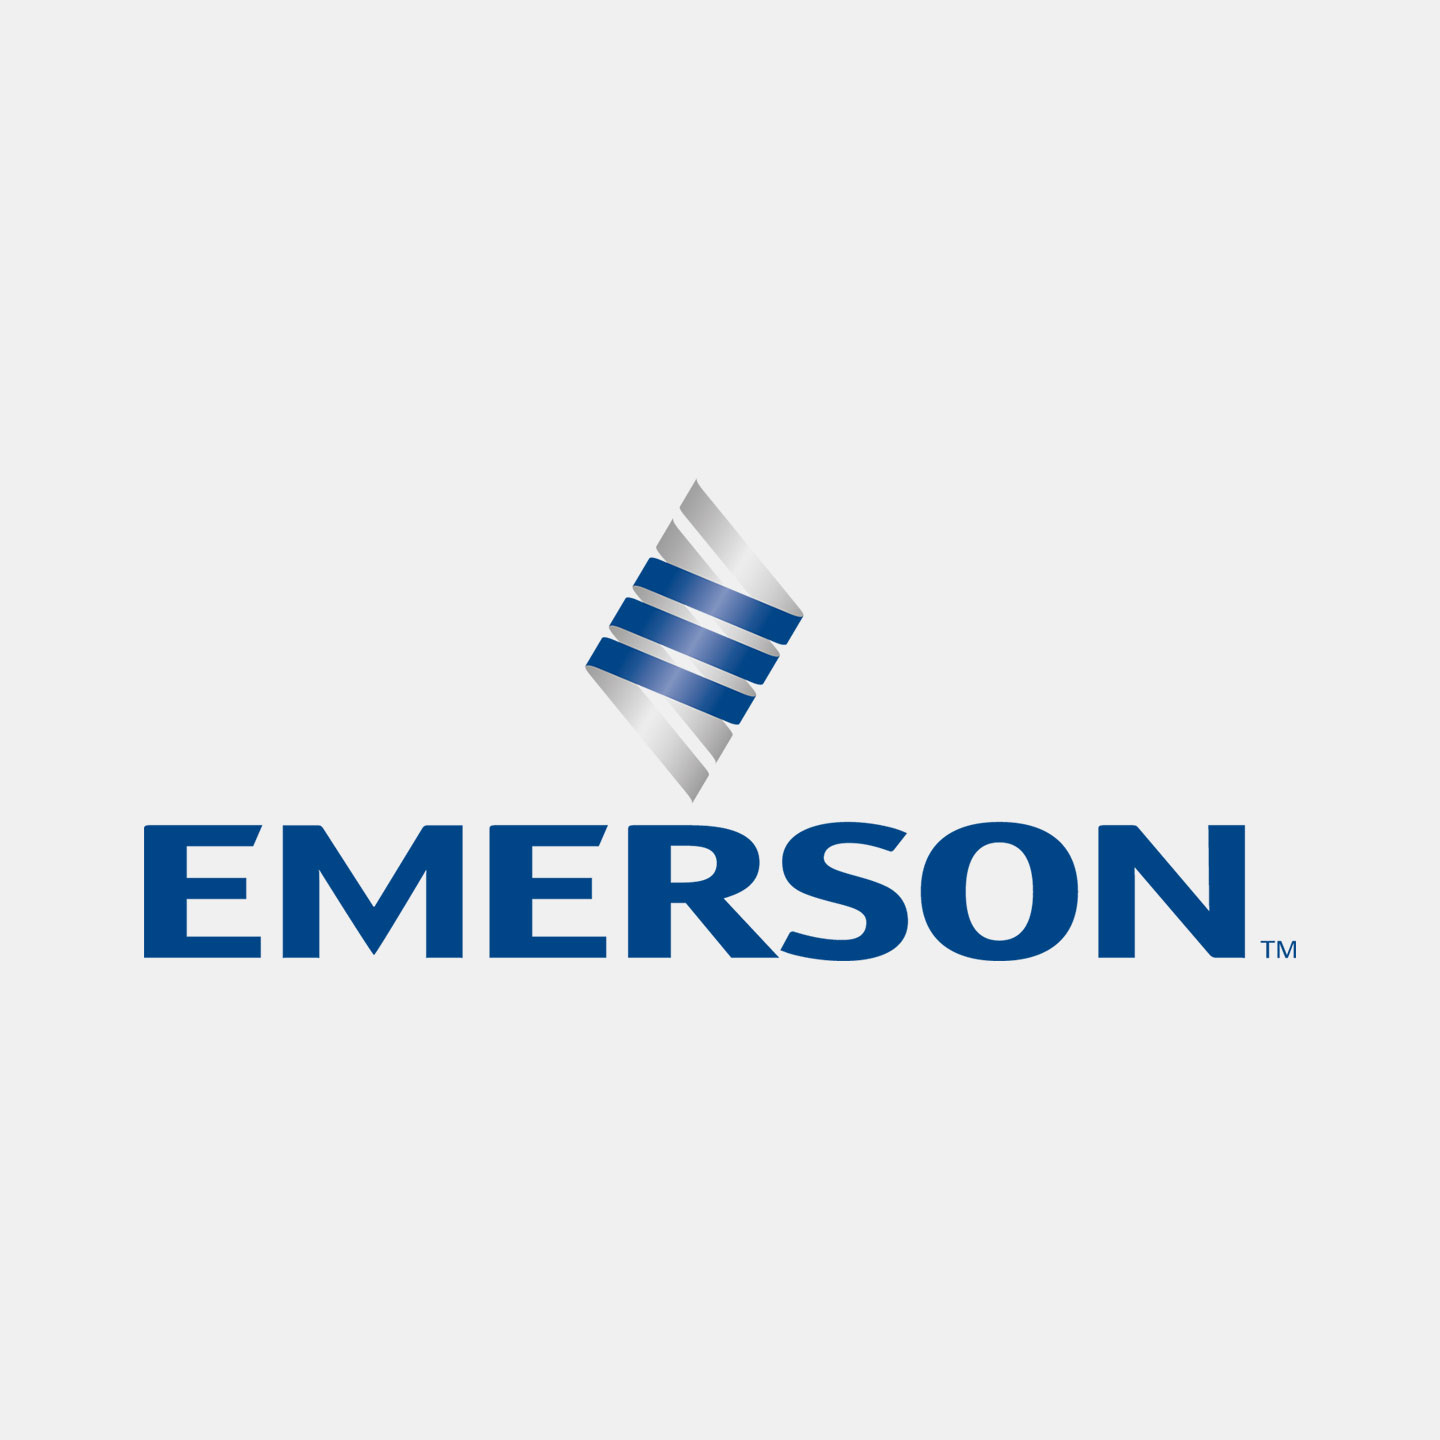 Het logo van POWARE Industrial Automation klant Emerson